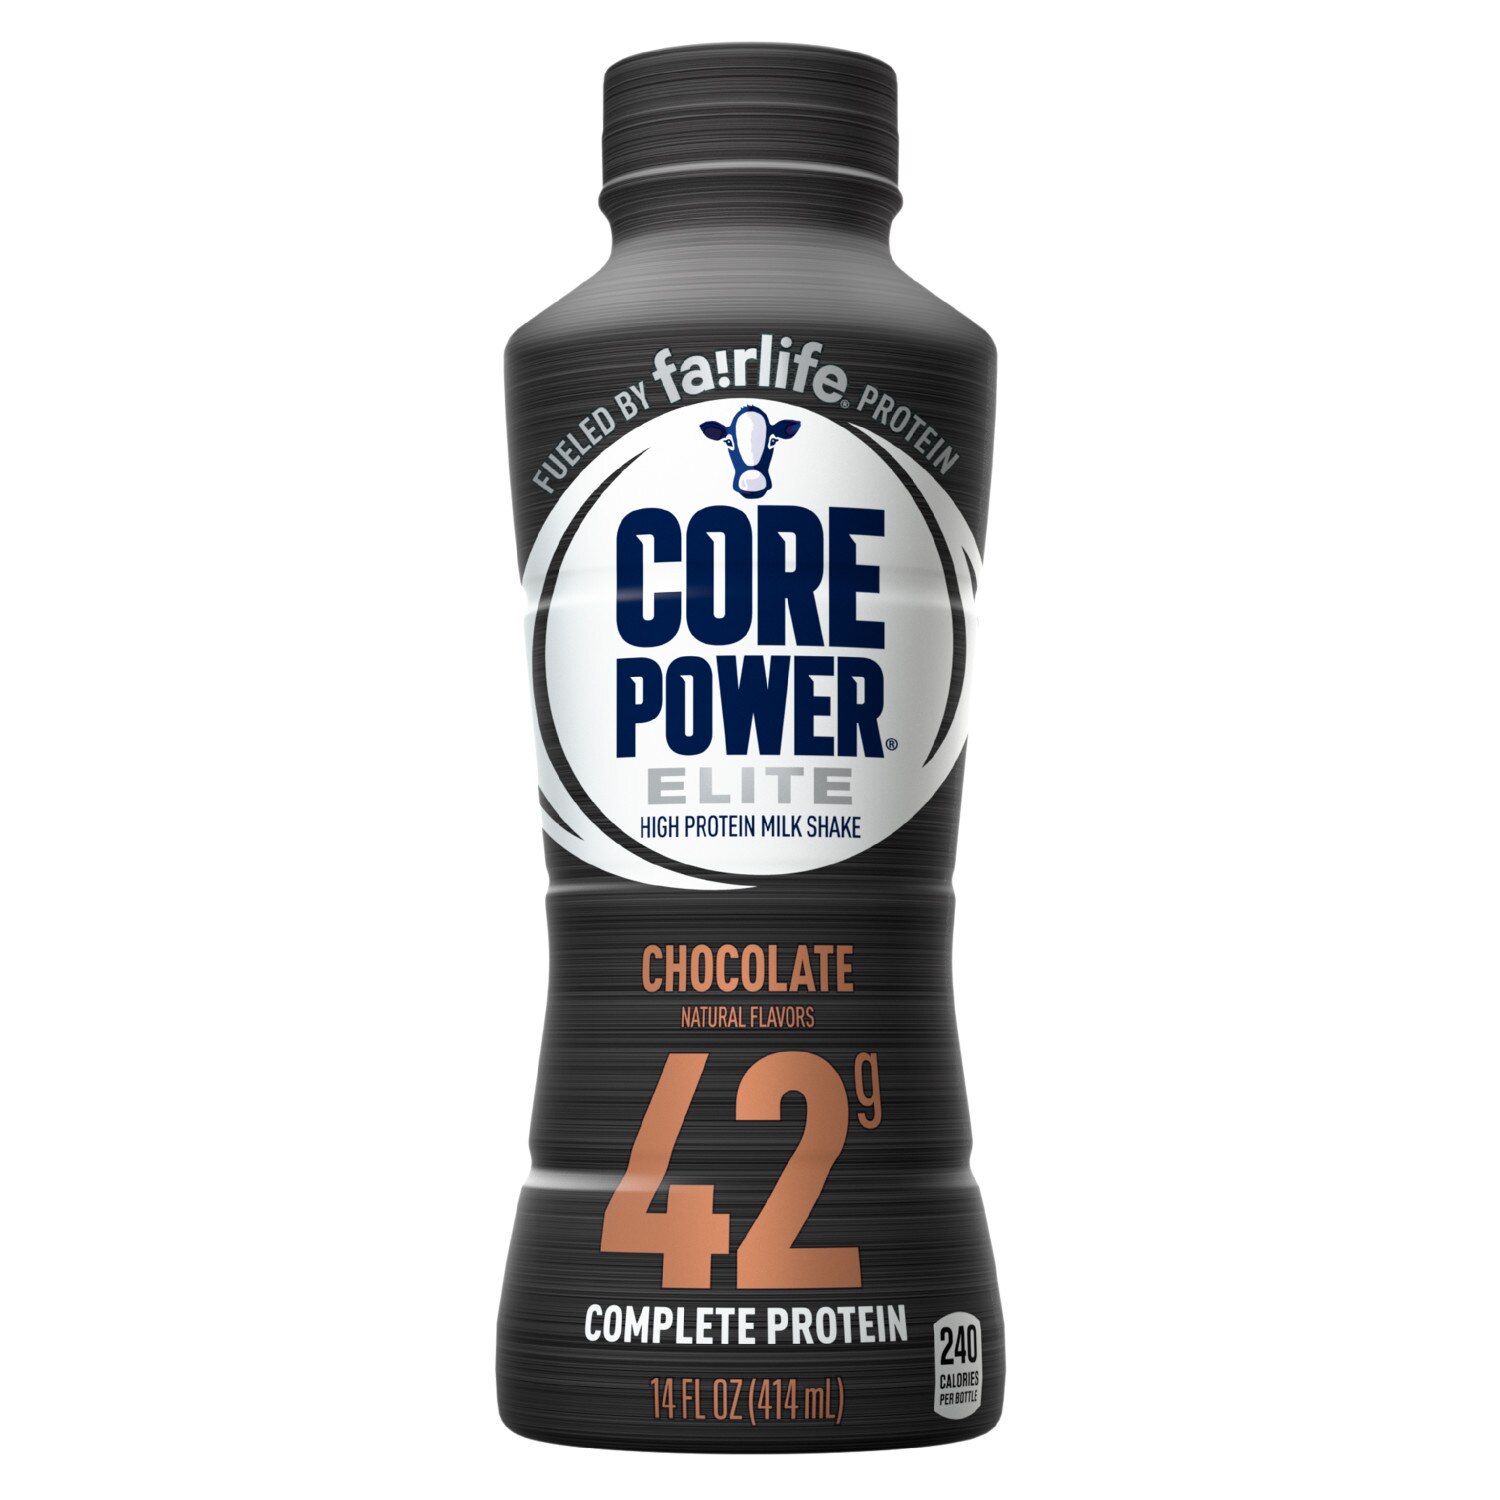 Core Power Elite 42g Chocolate Protein Drink by Fairlife Milk, 14 fl oz